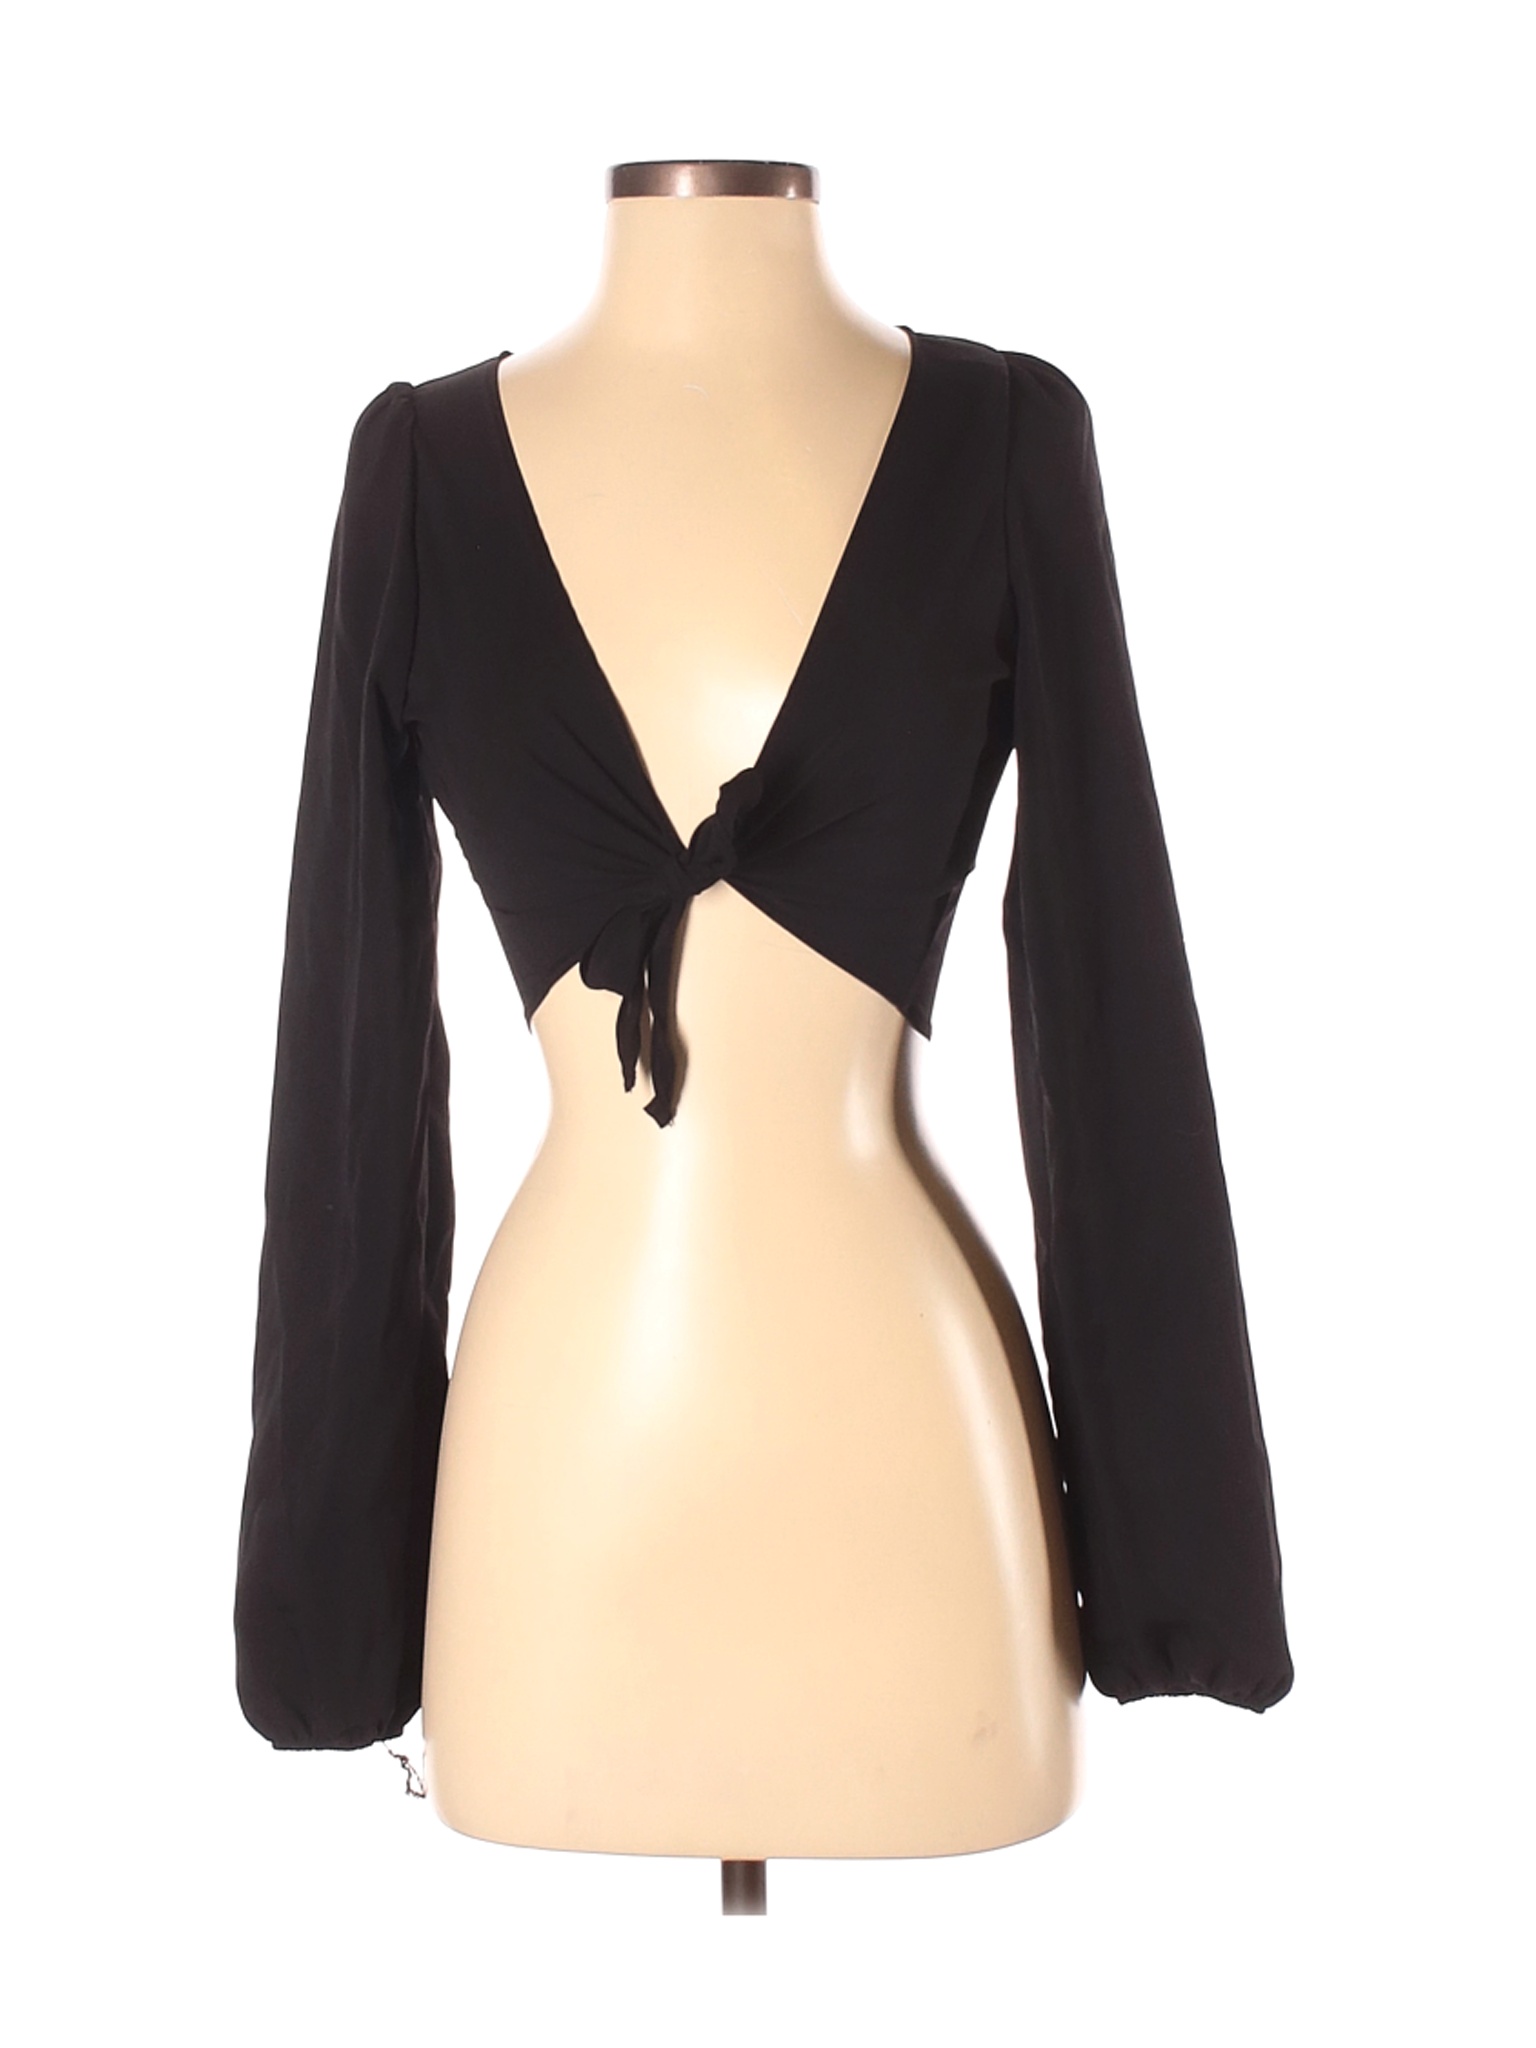 NWT Nasty Gal Inc. Women Black Long Sleeve Blouse 2 | eBay